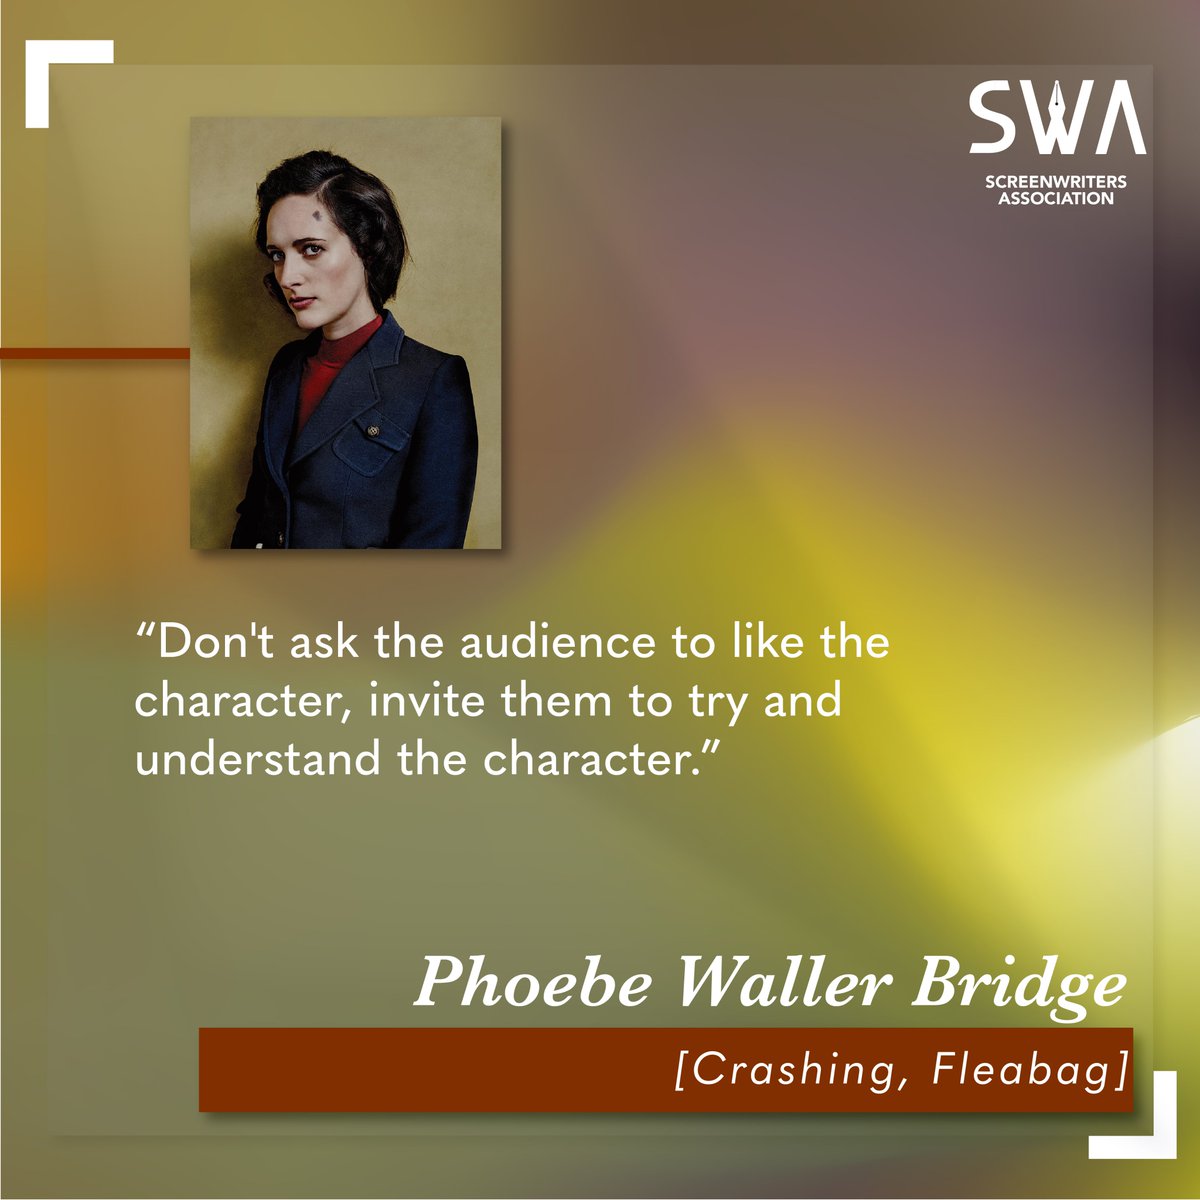 #screenwriting #swa #writerkaun #screenwriters #phoebewallerbridge #crashing #fleabag #quotes #screenwritingquotes #character